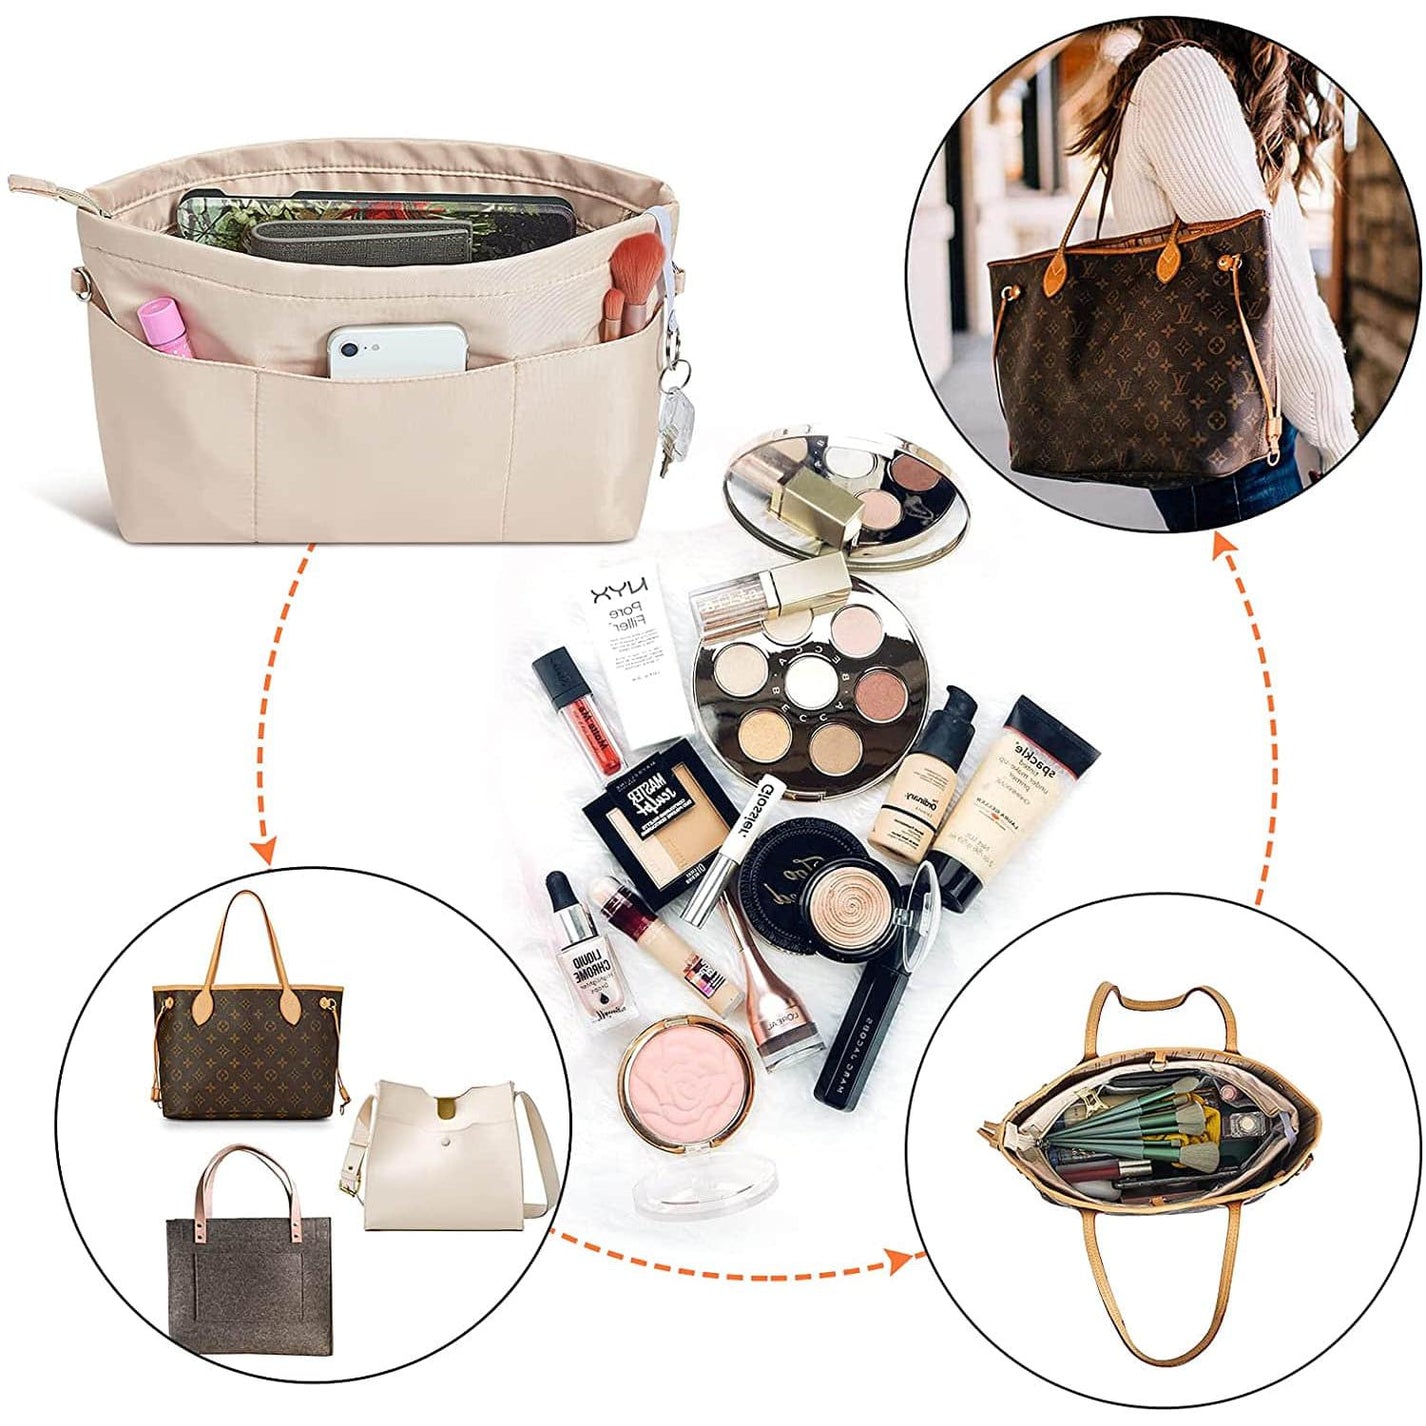 A-Premium Nylon Purse Organizer Tote Handbag Insert Organizers Bag in ...